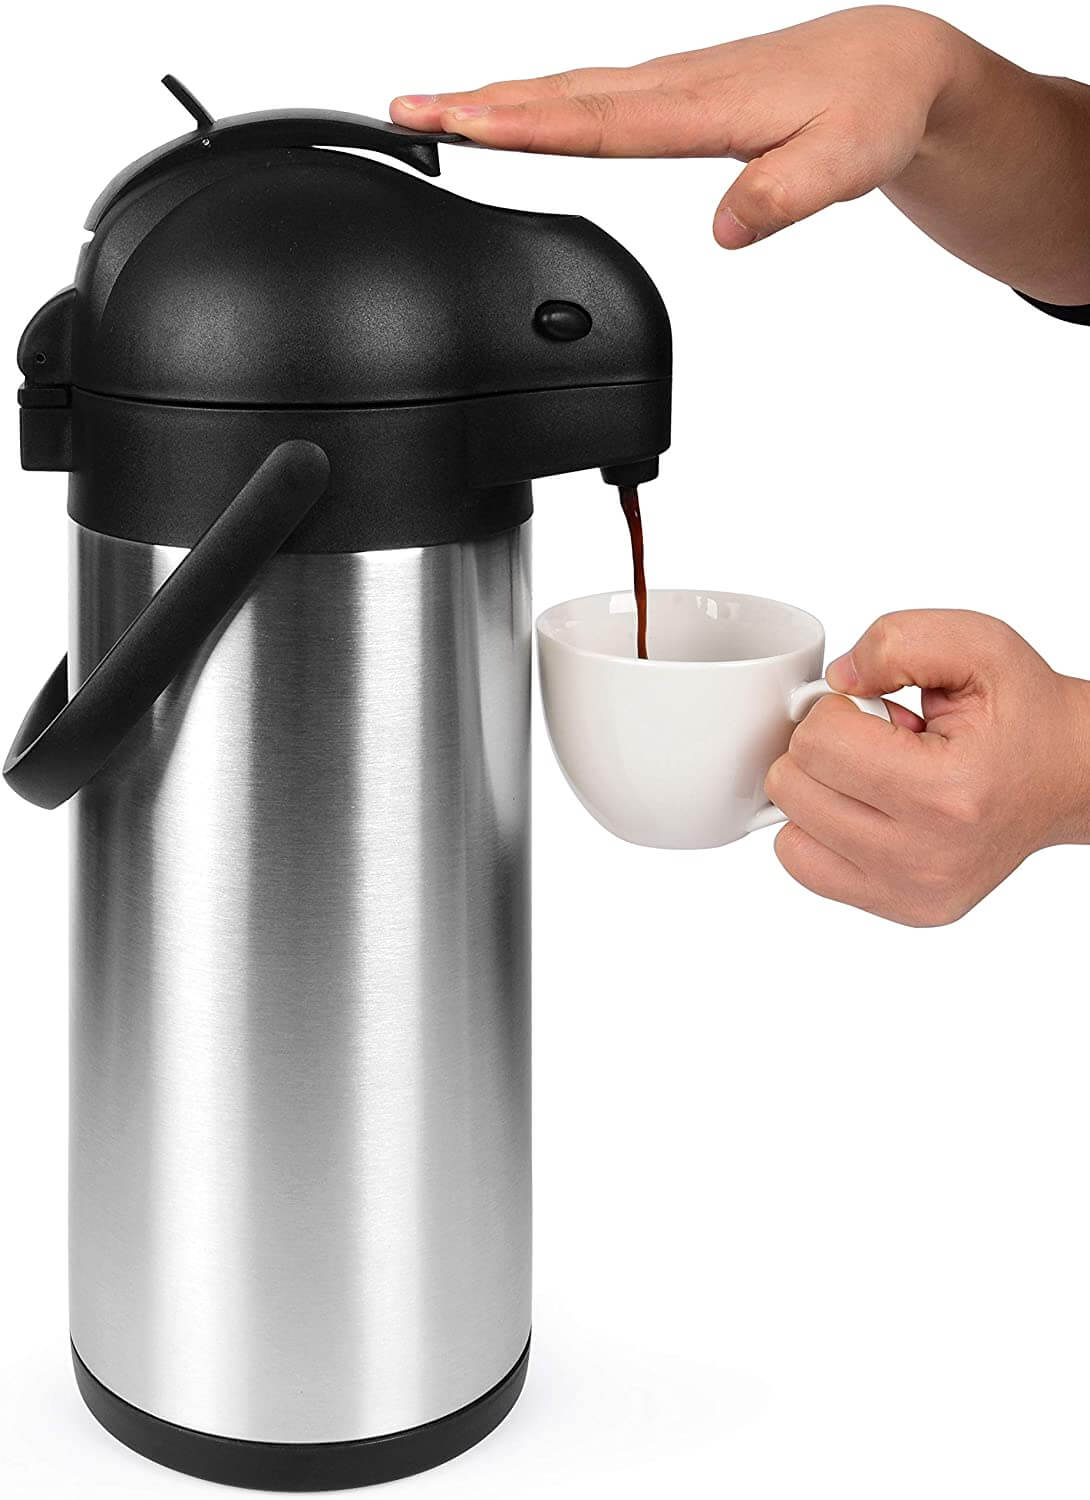 https://www.foodsharkmarfa.com/wp-content/uploads/2020/07/Cresimo-Airpot-Thermal-Coffee-Carafe.jpg